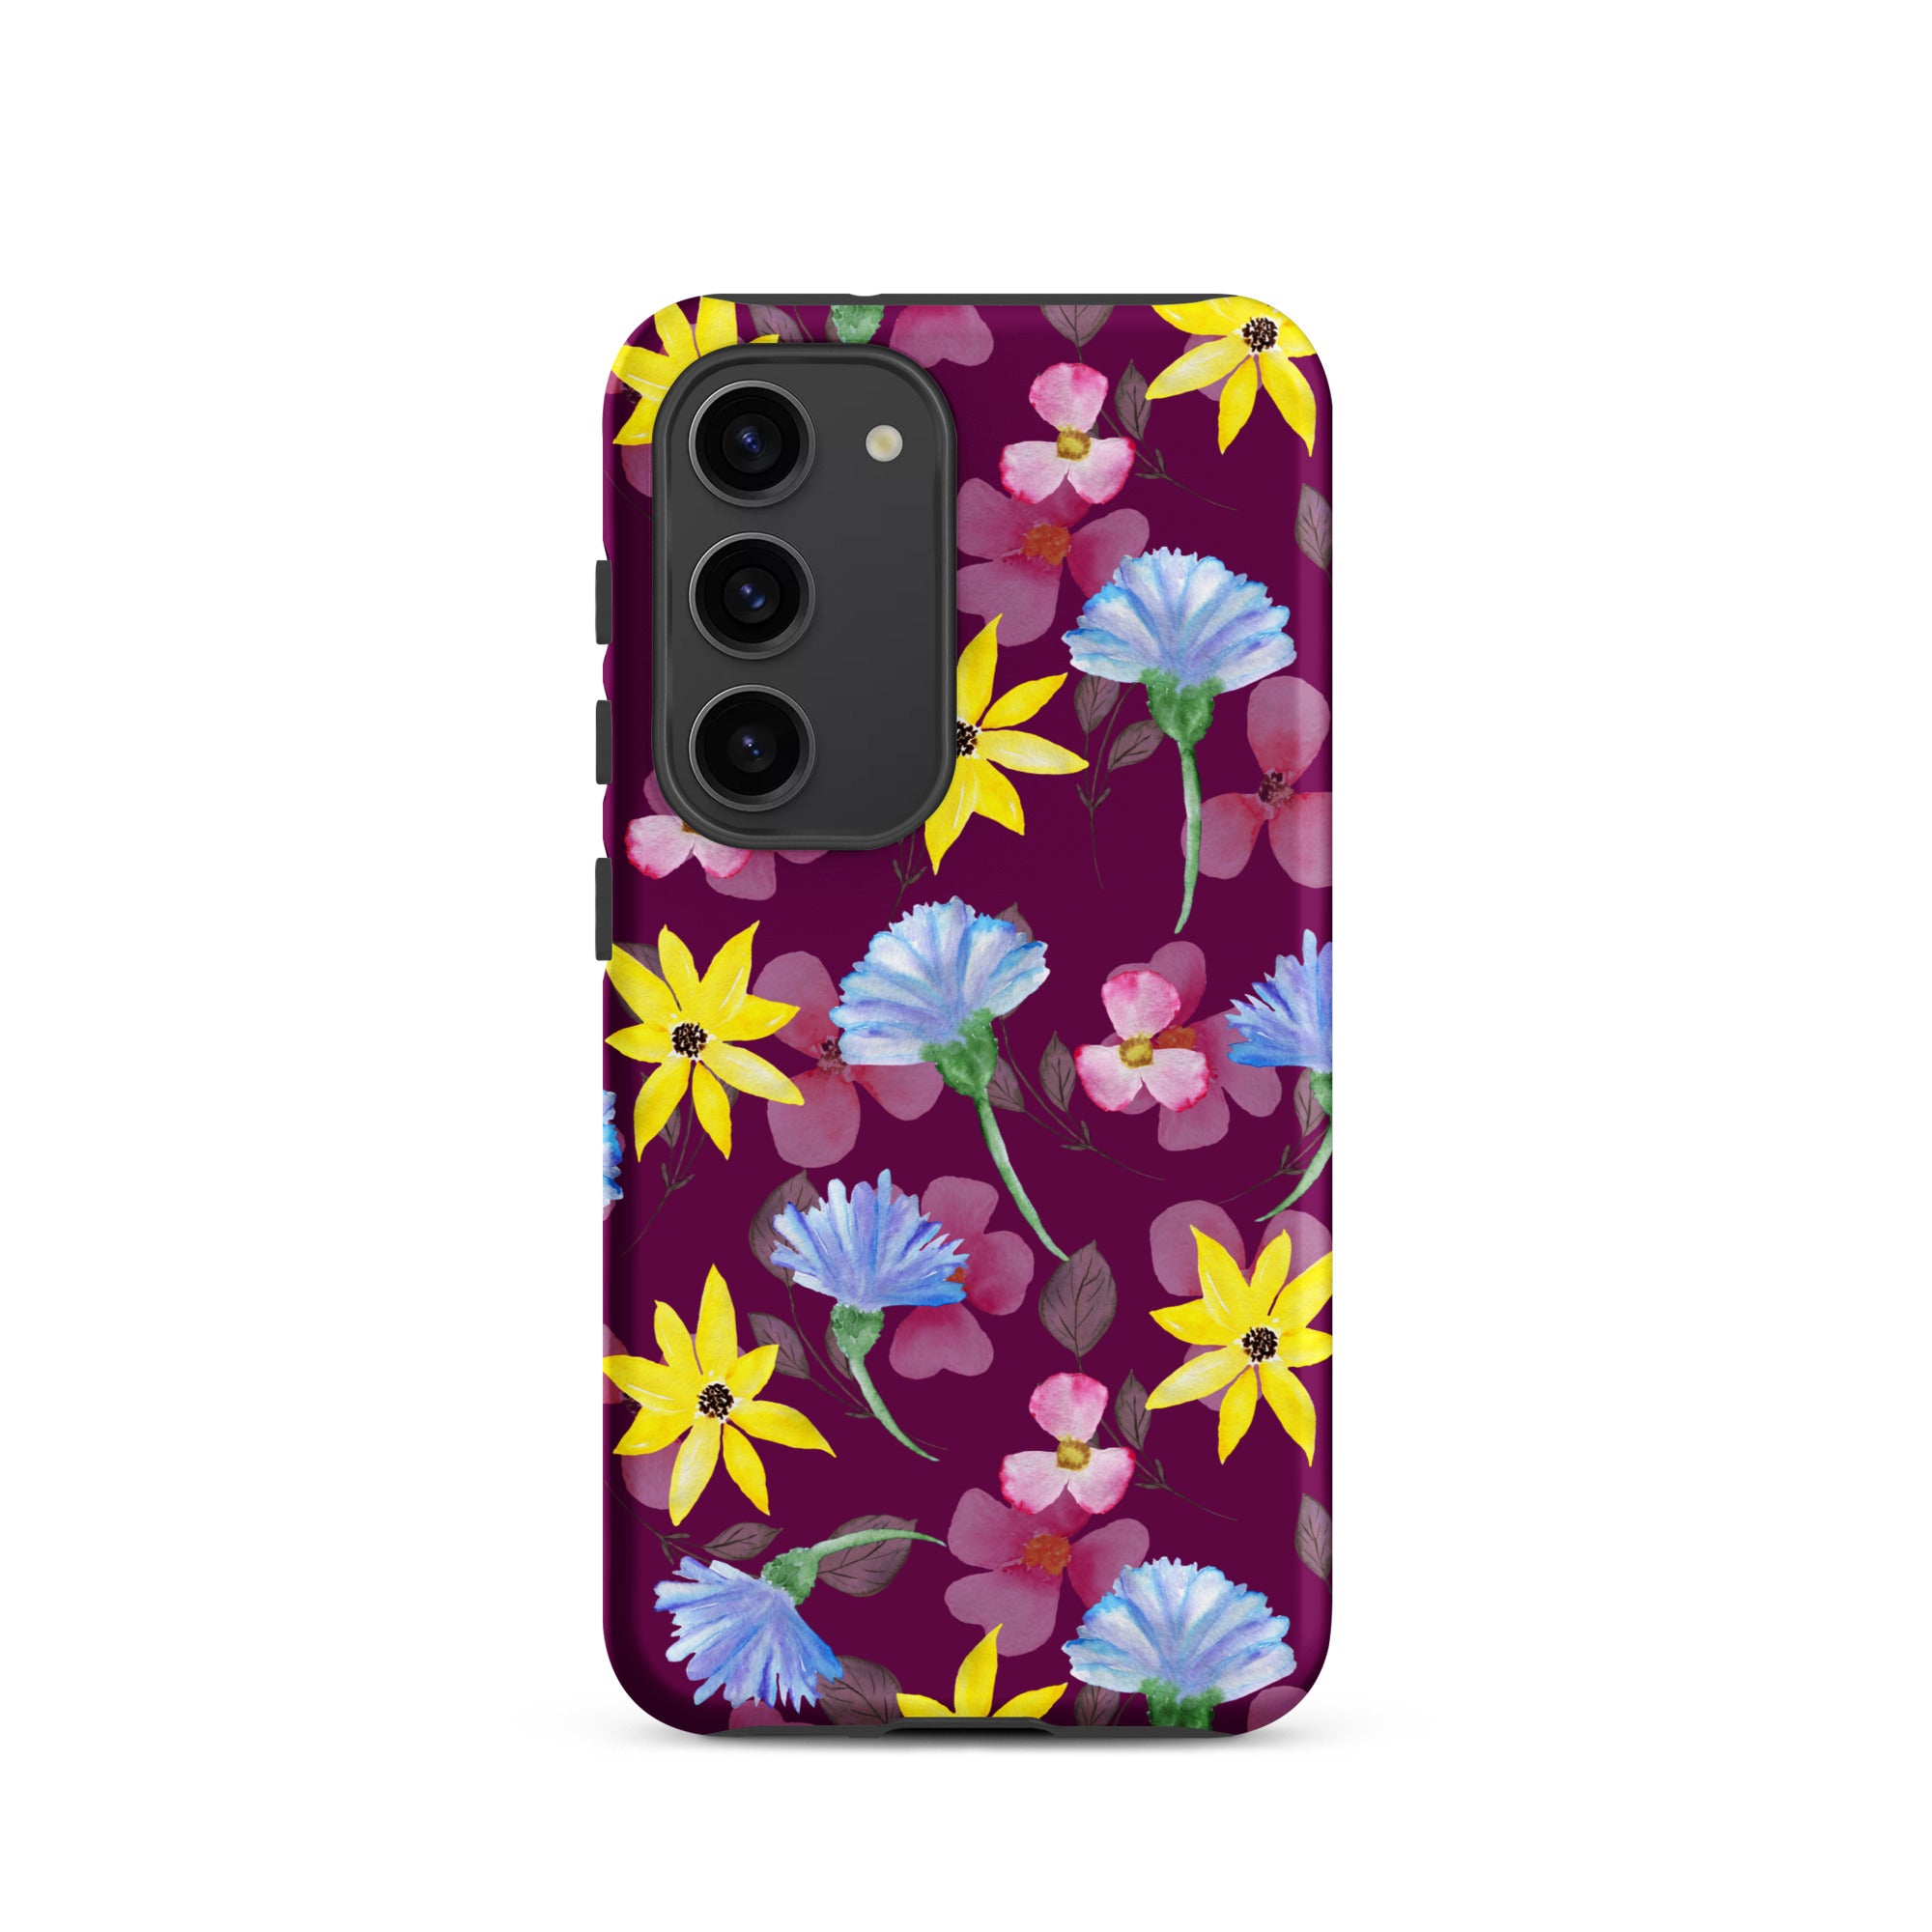 Tough case for Samsung®- Floral